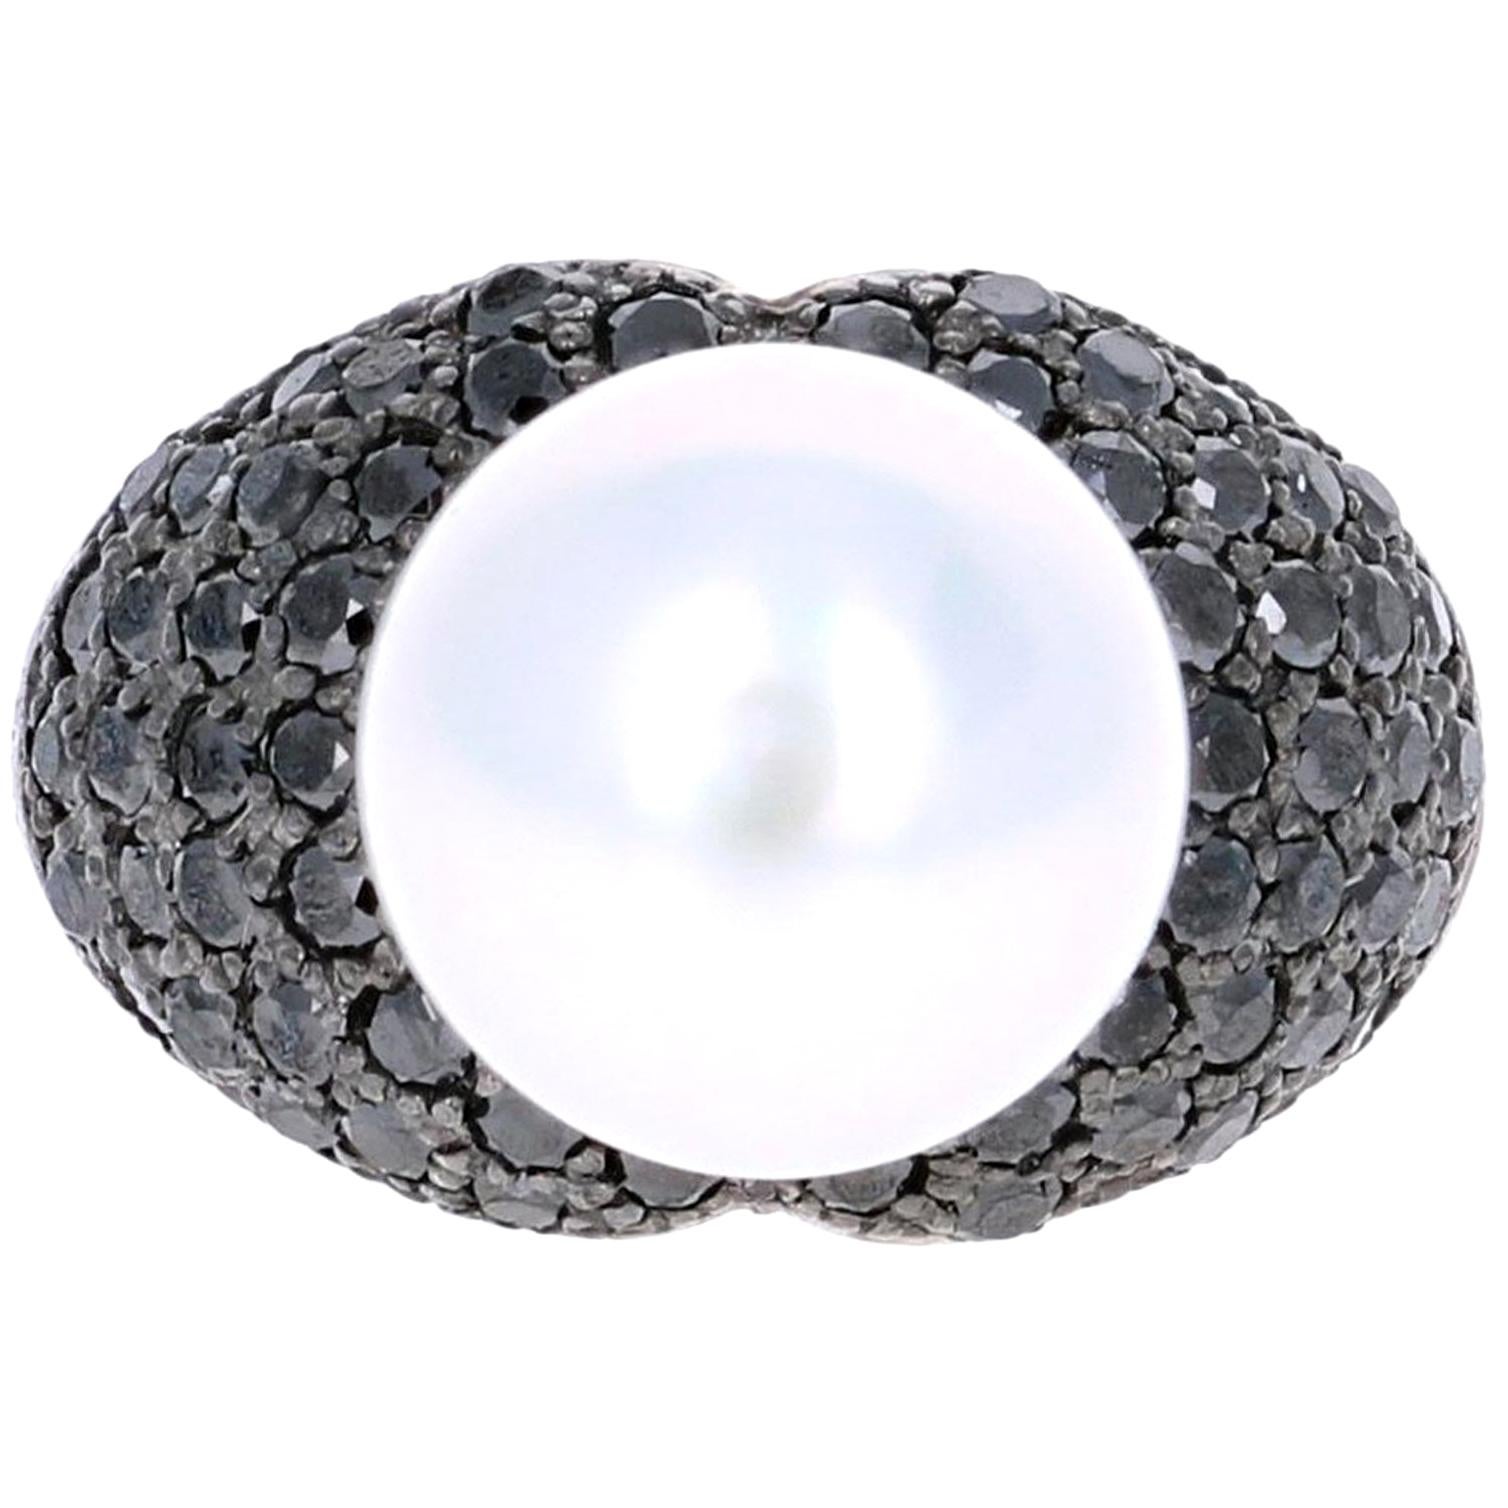 1.68 Carat South Sea Pearl Black Diamond Cocktail Ring